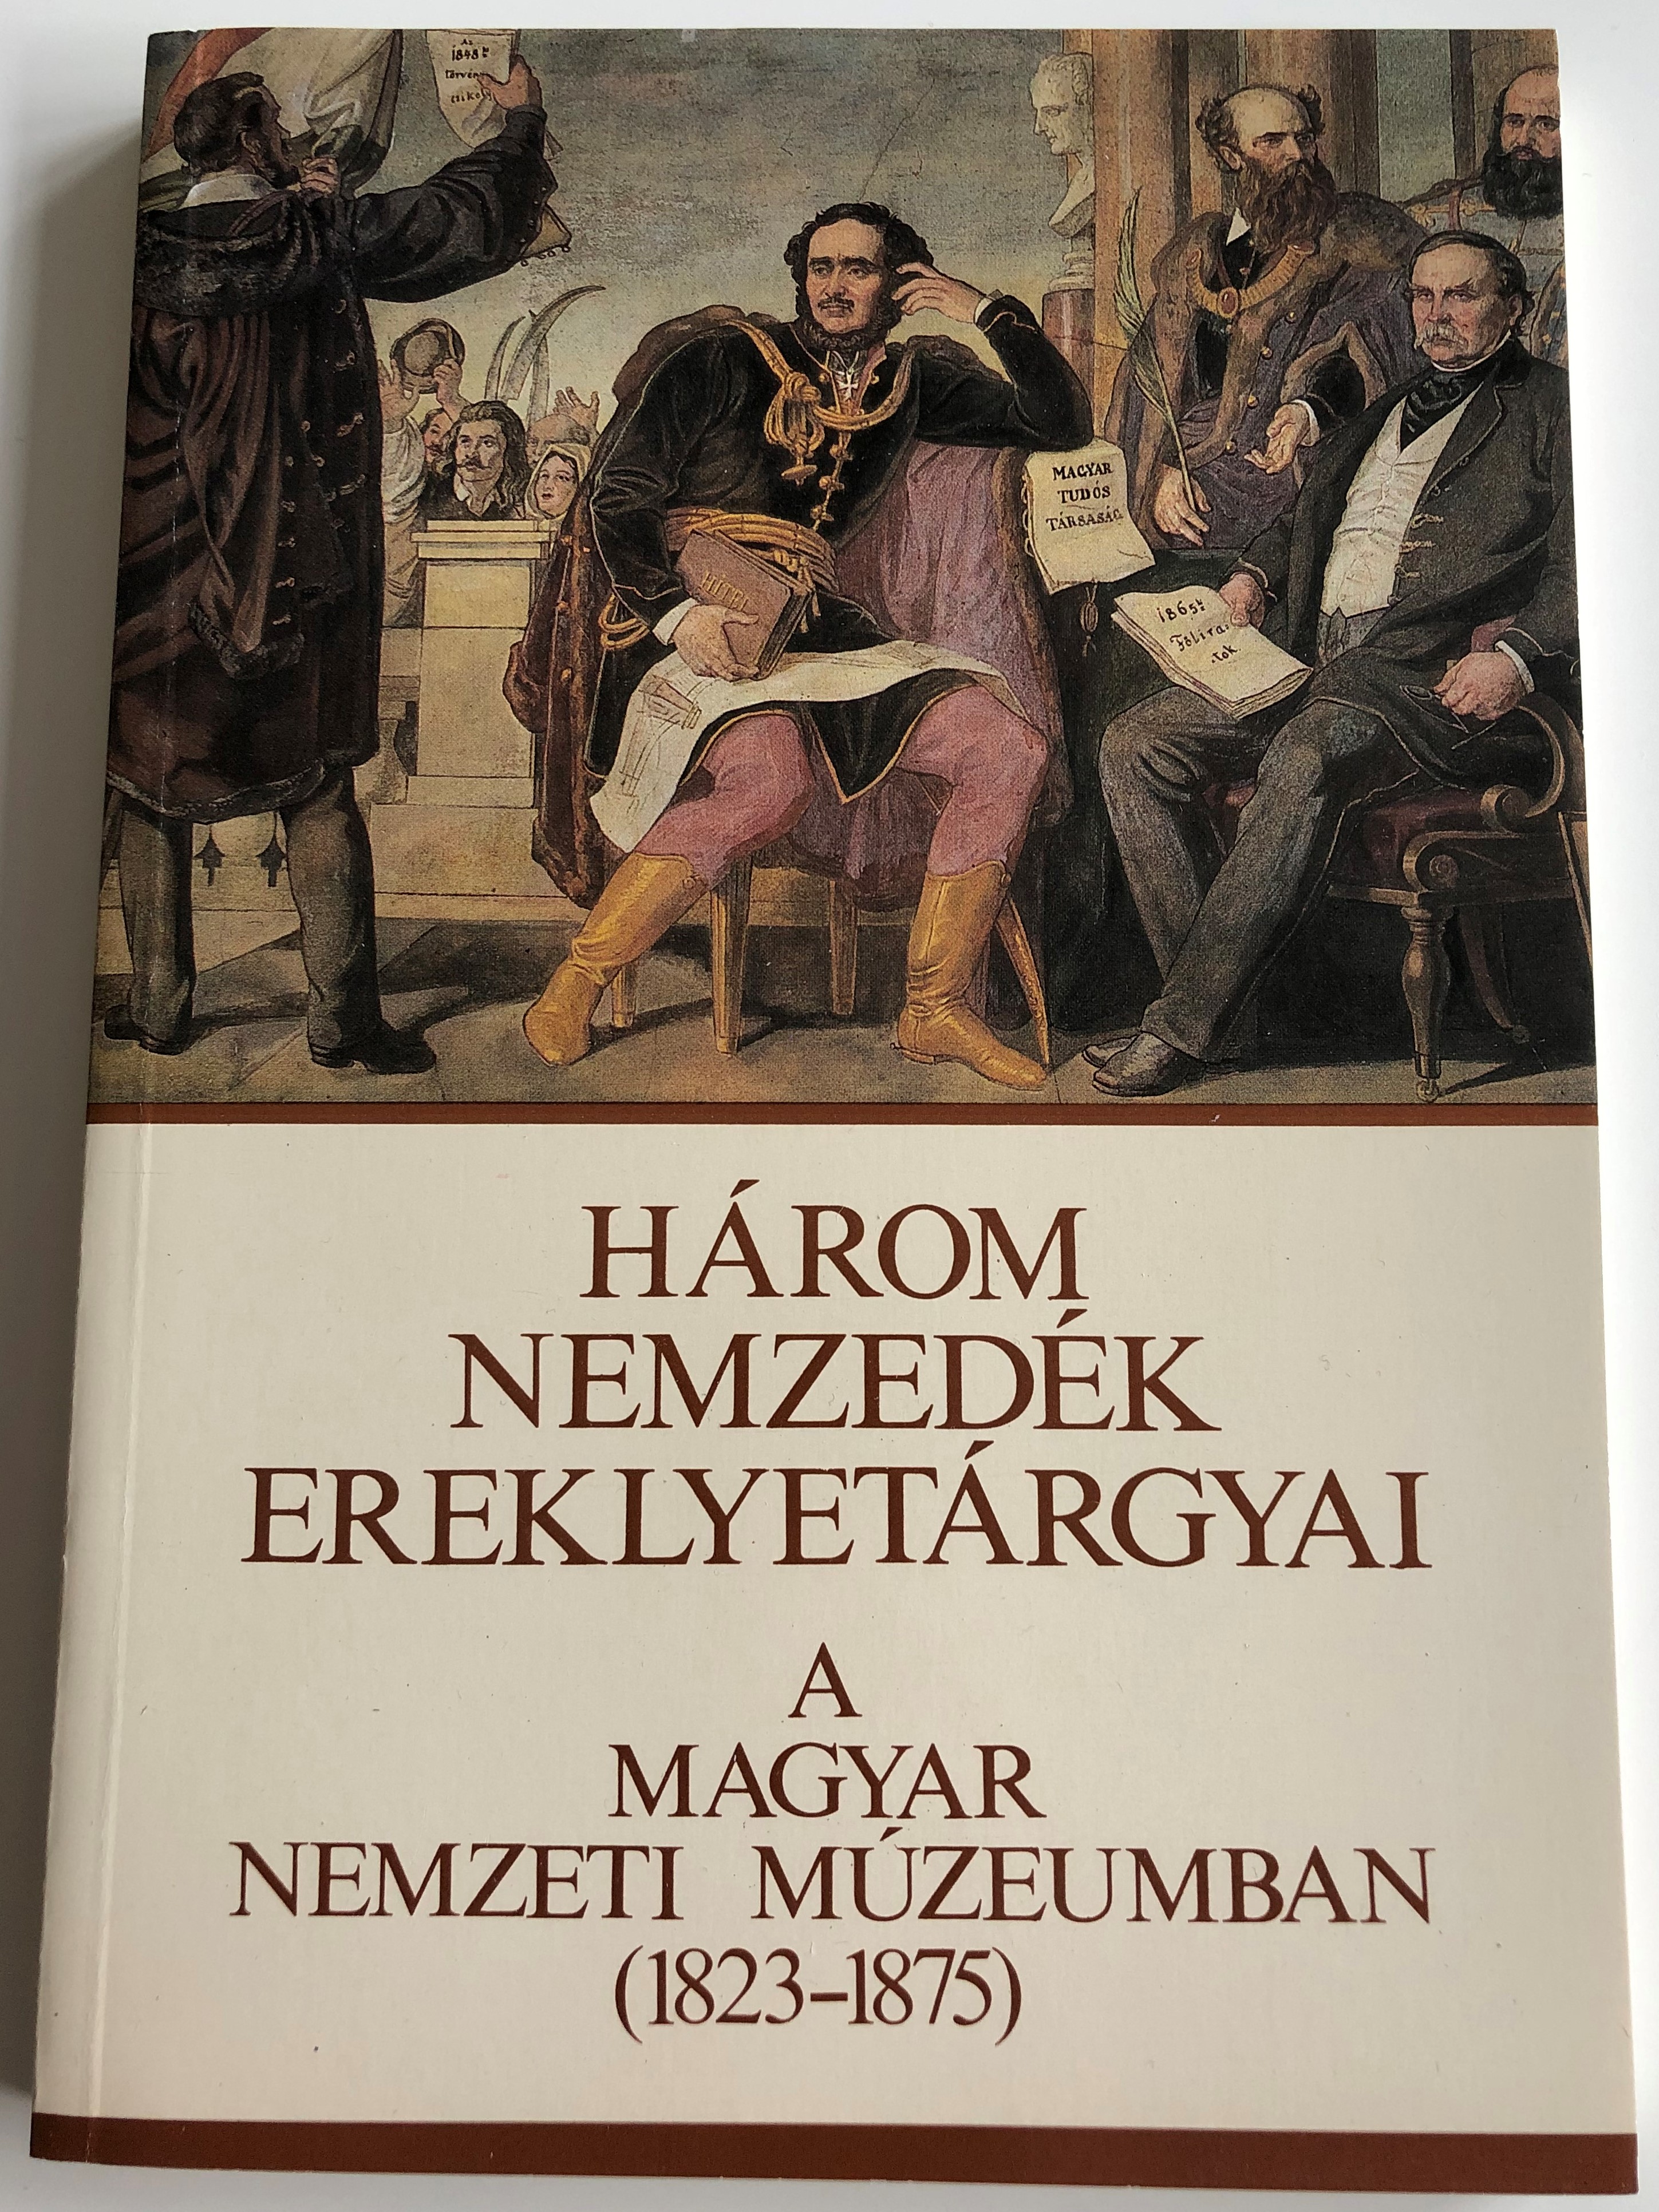 h-rom-nemzed-k-ereklyet-rgyai-a-magyar-nemzeti-m-zeumben-1823-1875-katal-gus-relics-of-three-generations-in-the-hungarian-national-museum-paperback-1988-magyar-nemzeti-m-zeum-1-.jpg